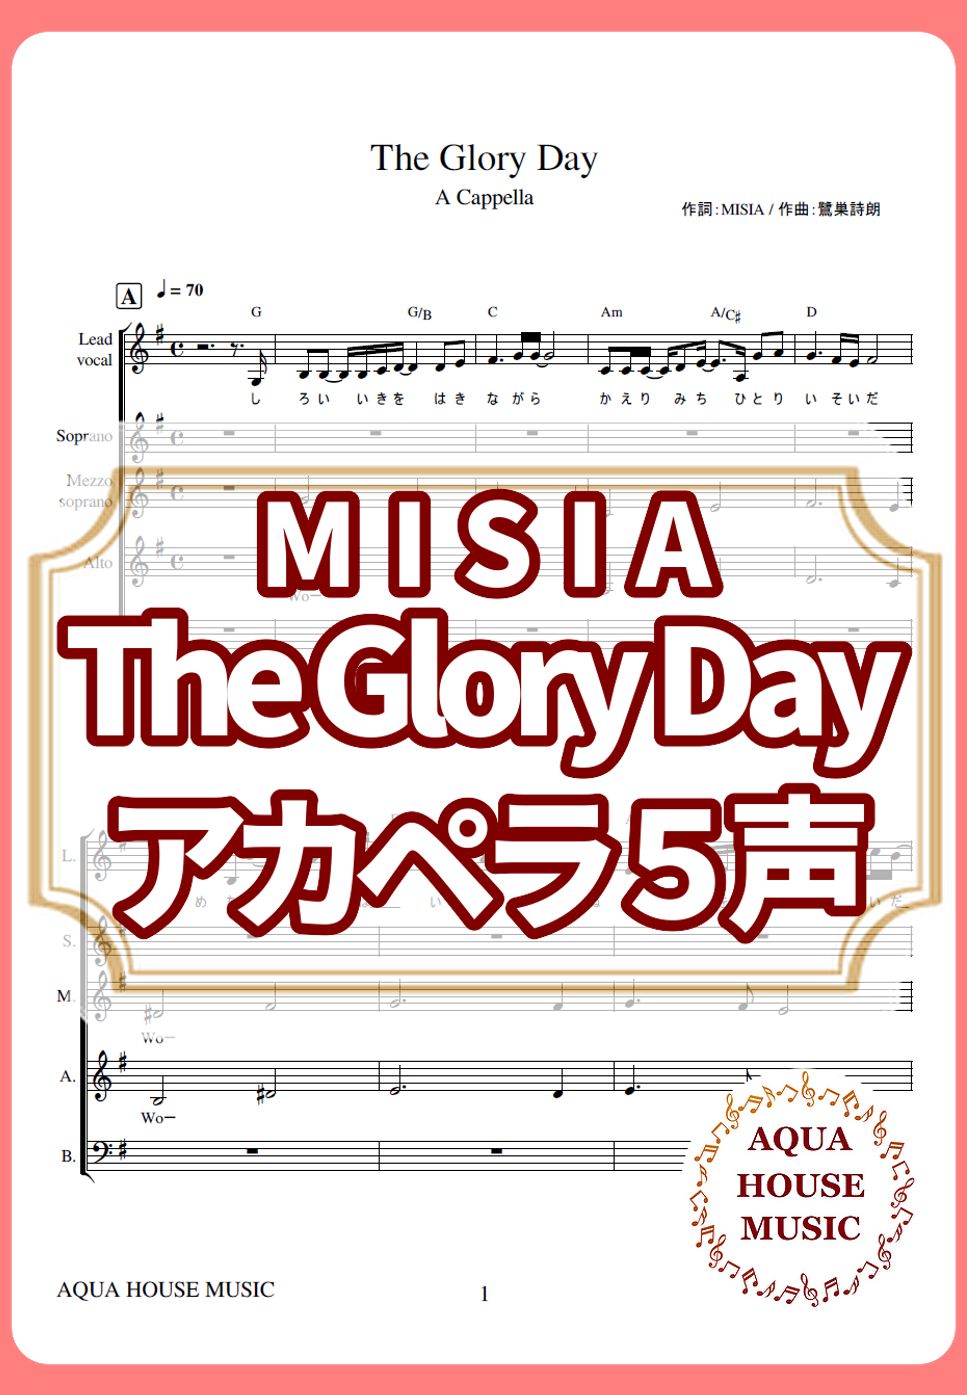 MISIA - The Glory Day (アカペラ楽譜♪５声ボイパなし) by 飯田 亜紗子